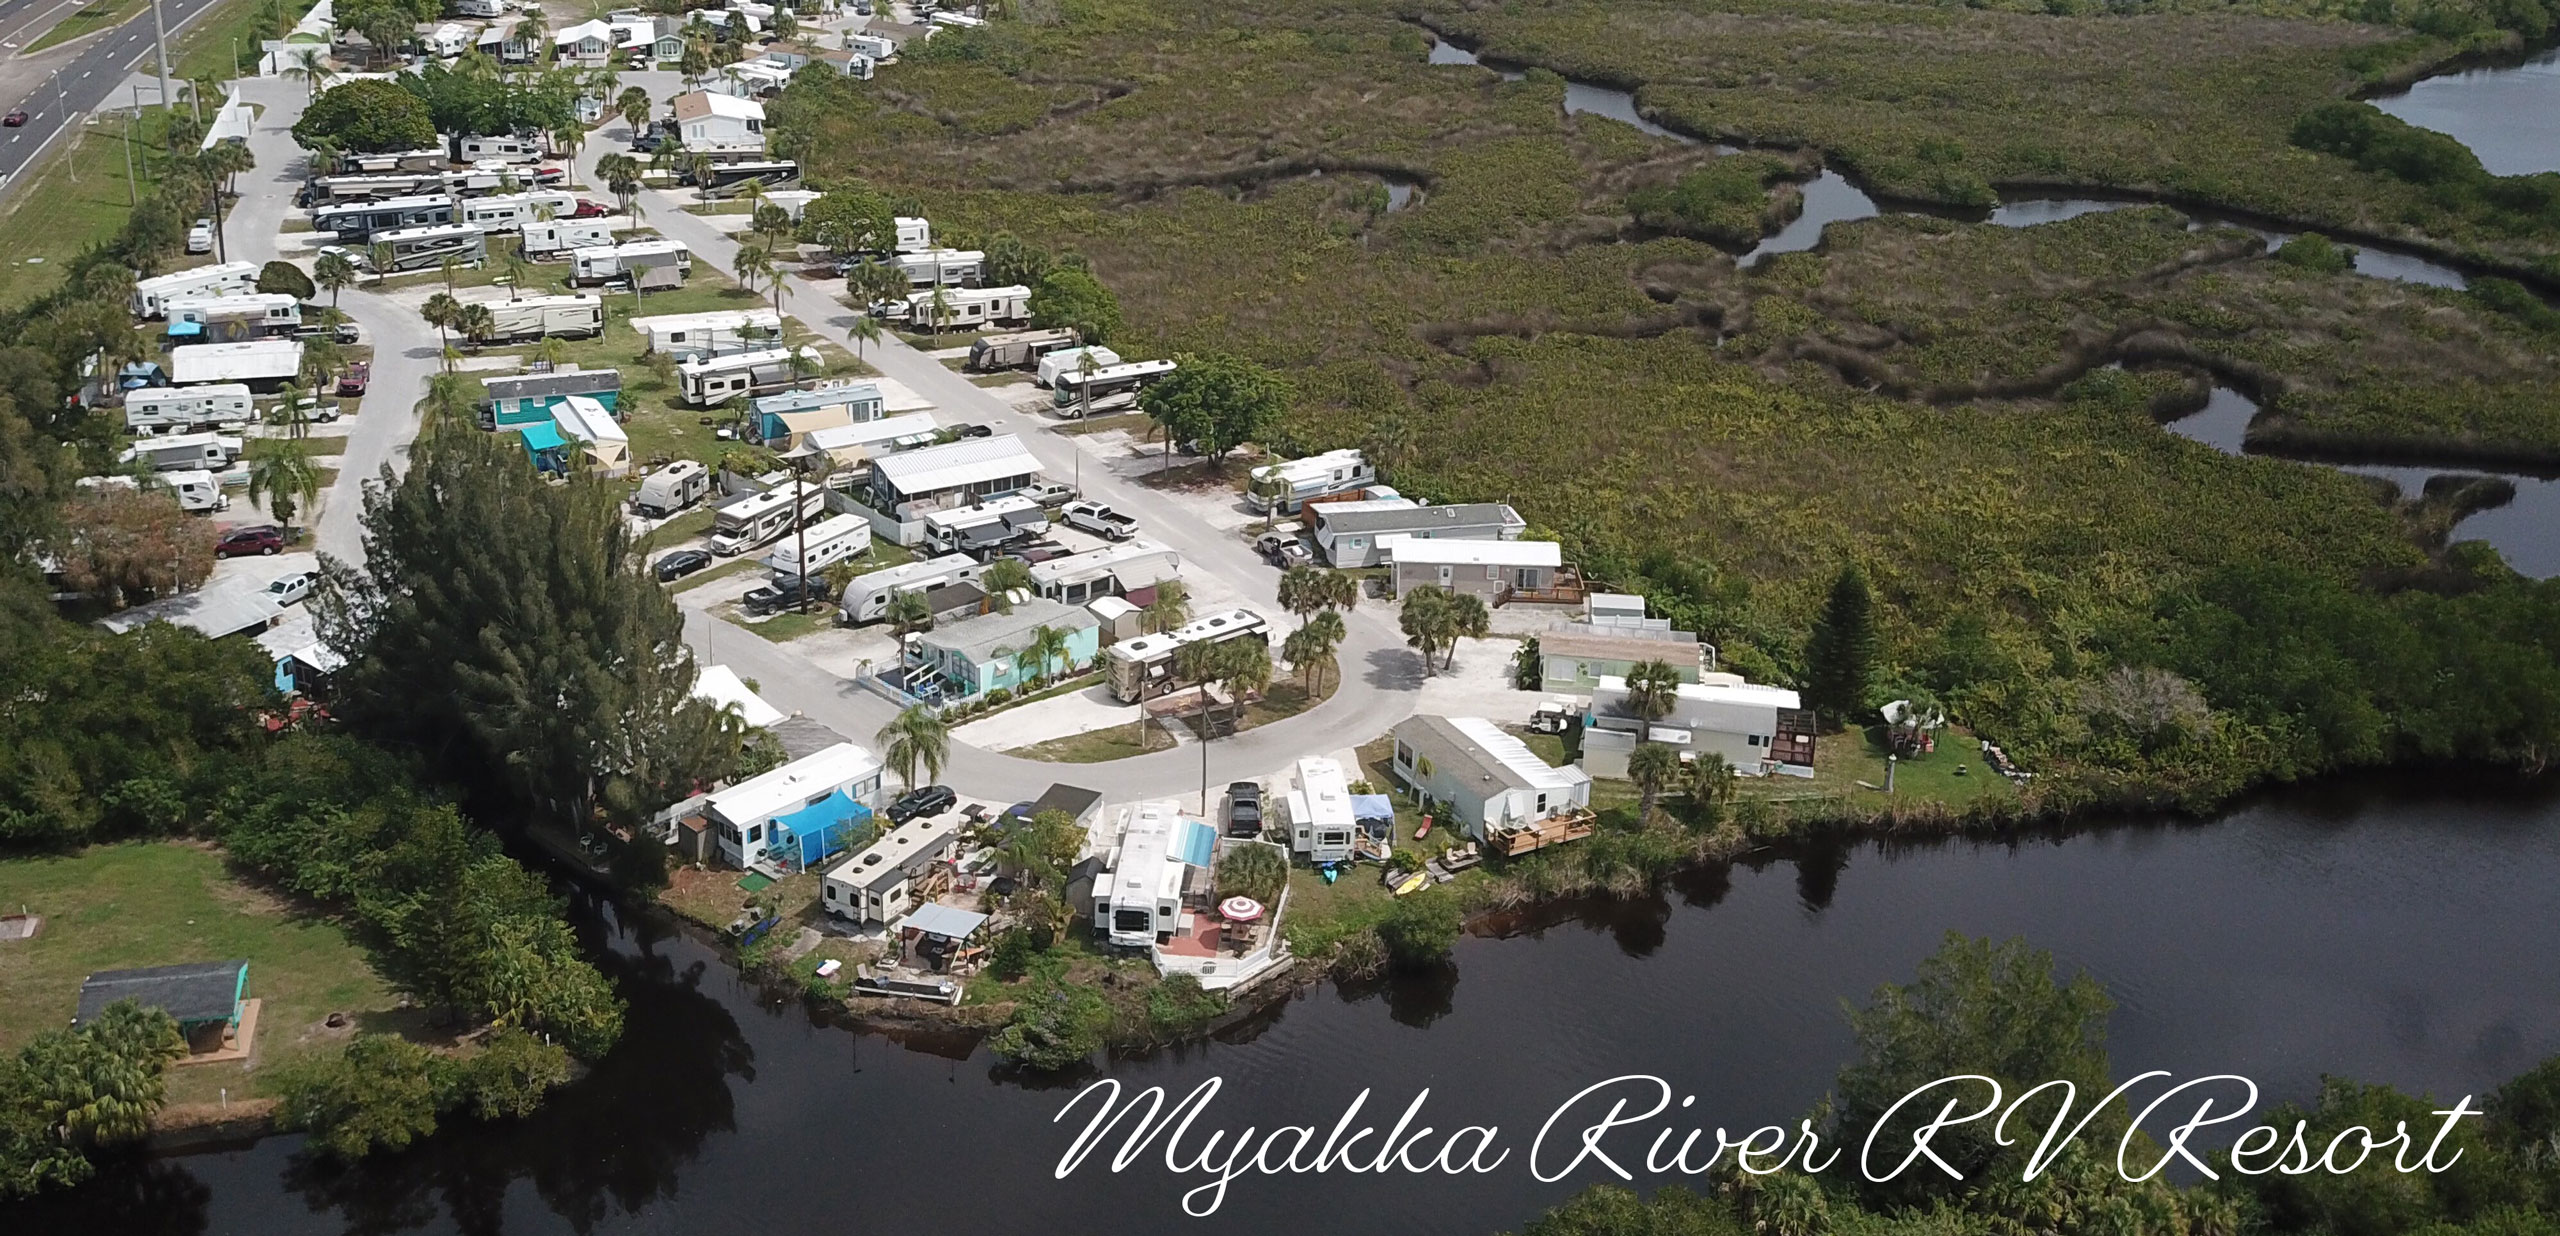 Myakka River RV Resort